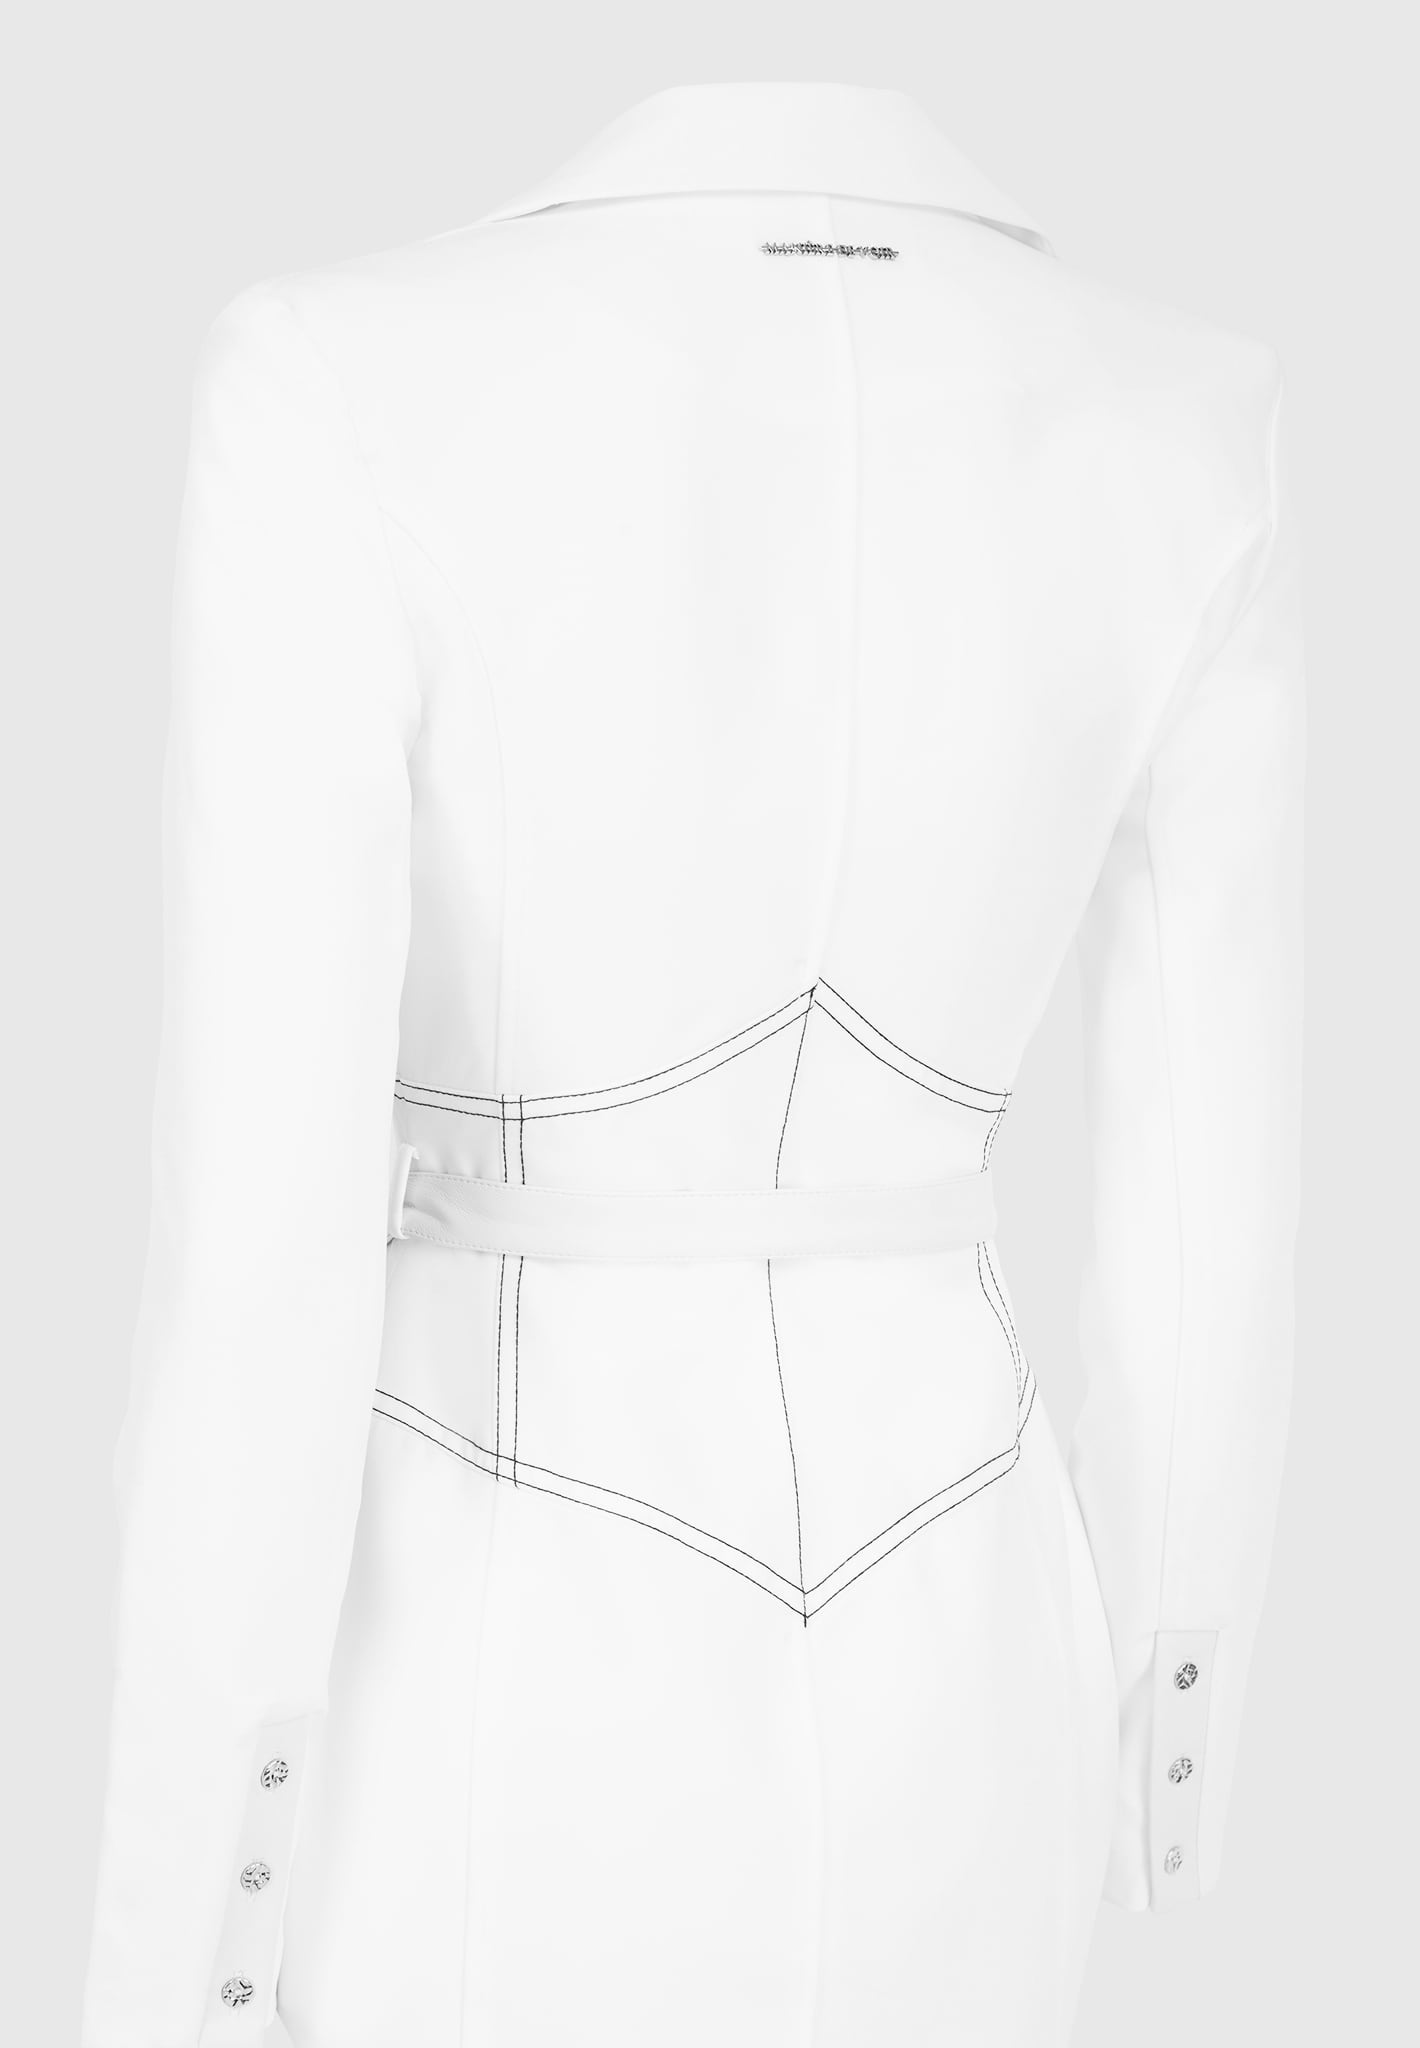 corset-blazer-dress-with-chain-white-2